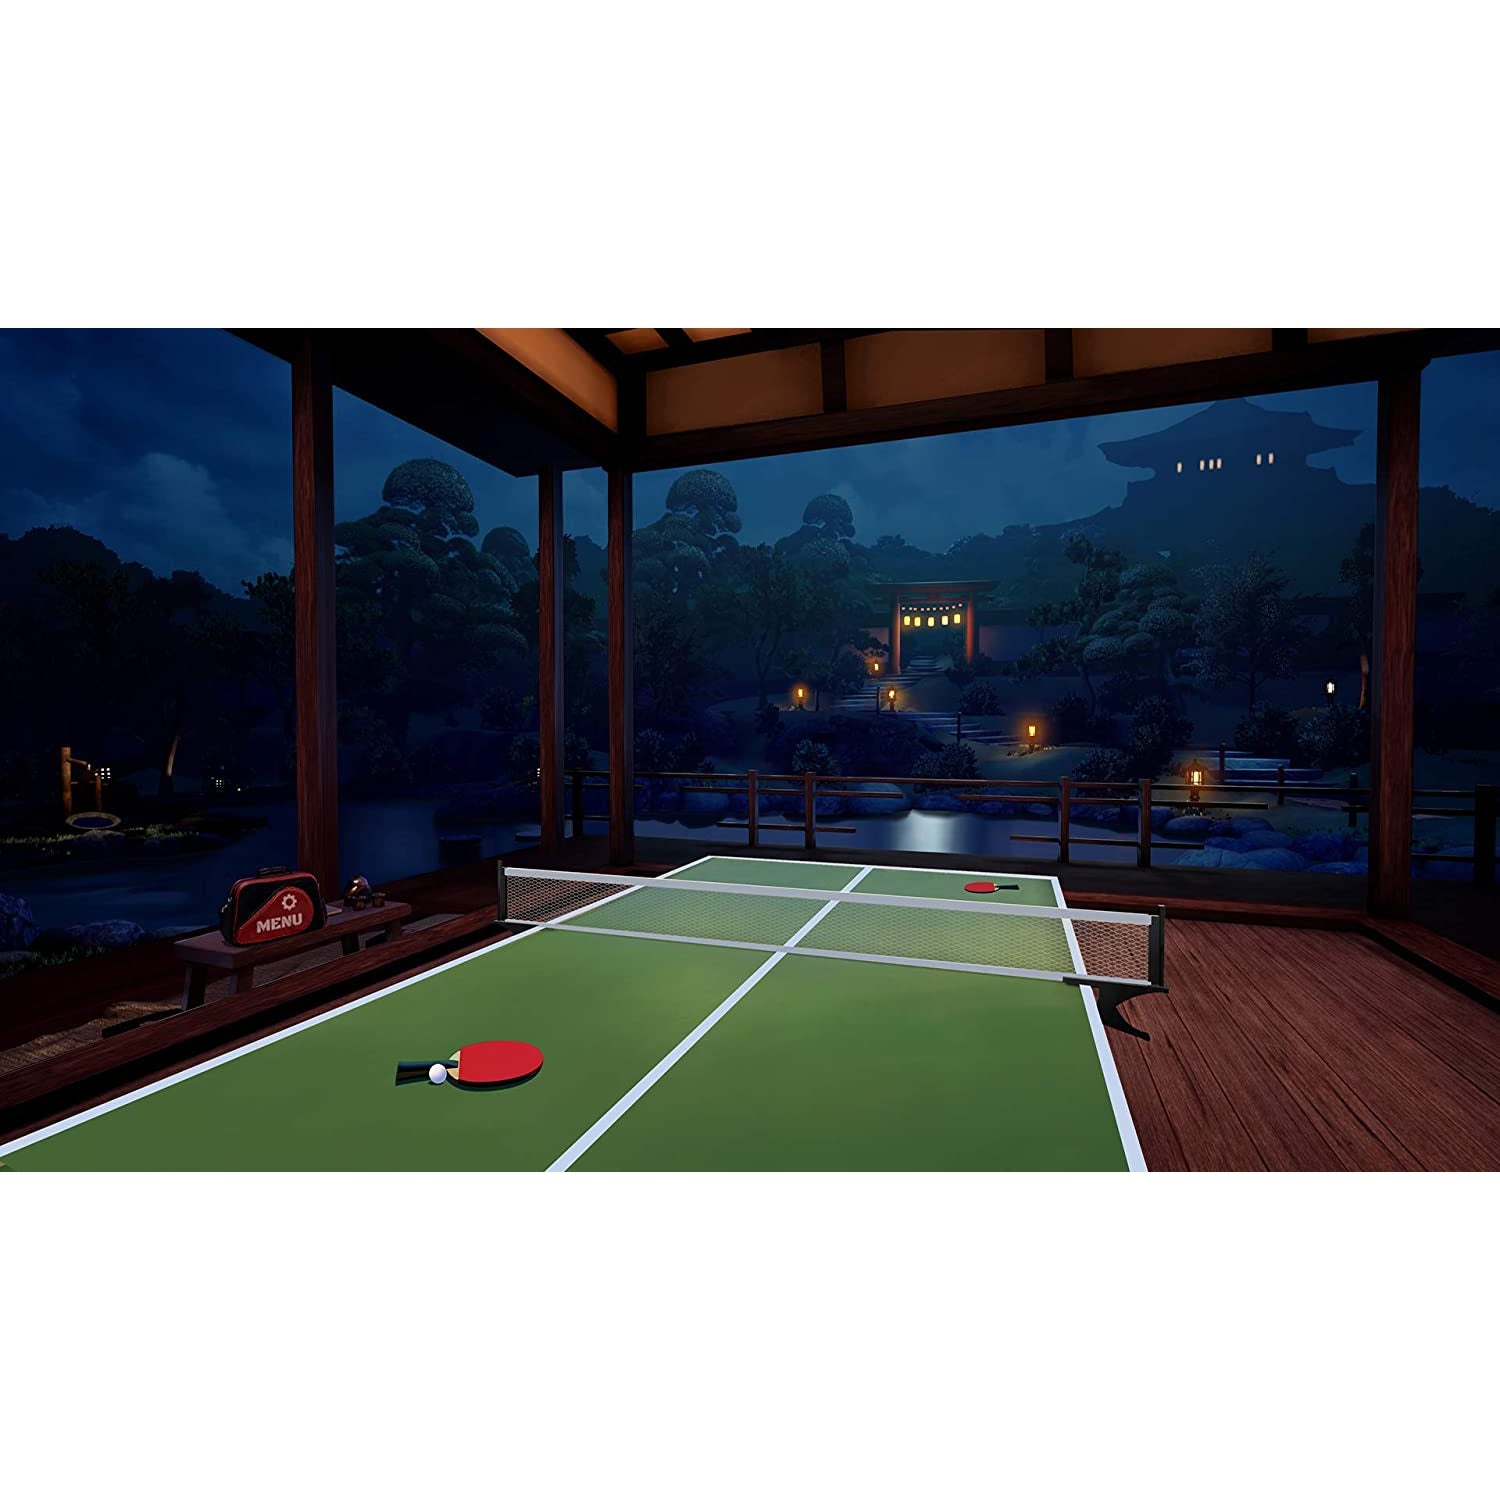 VR Ping Pong Pro (PSVR/PS4)